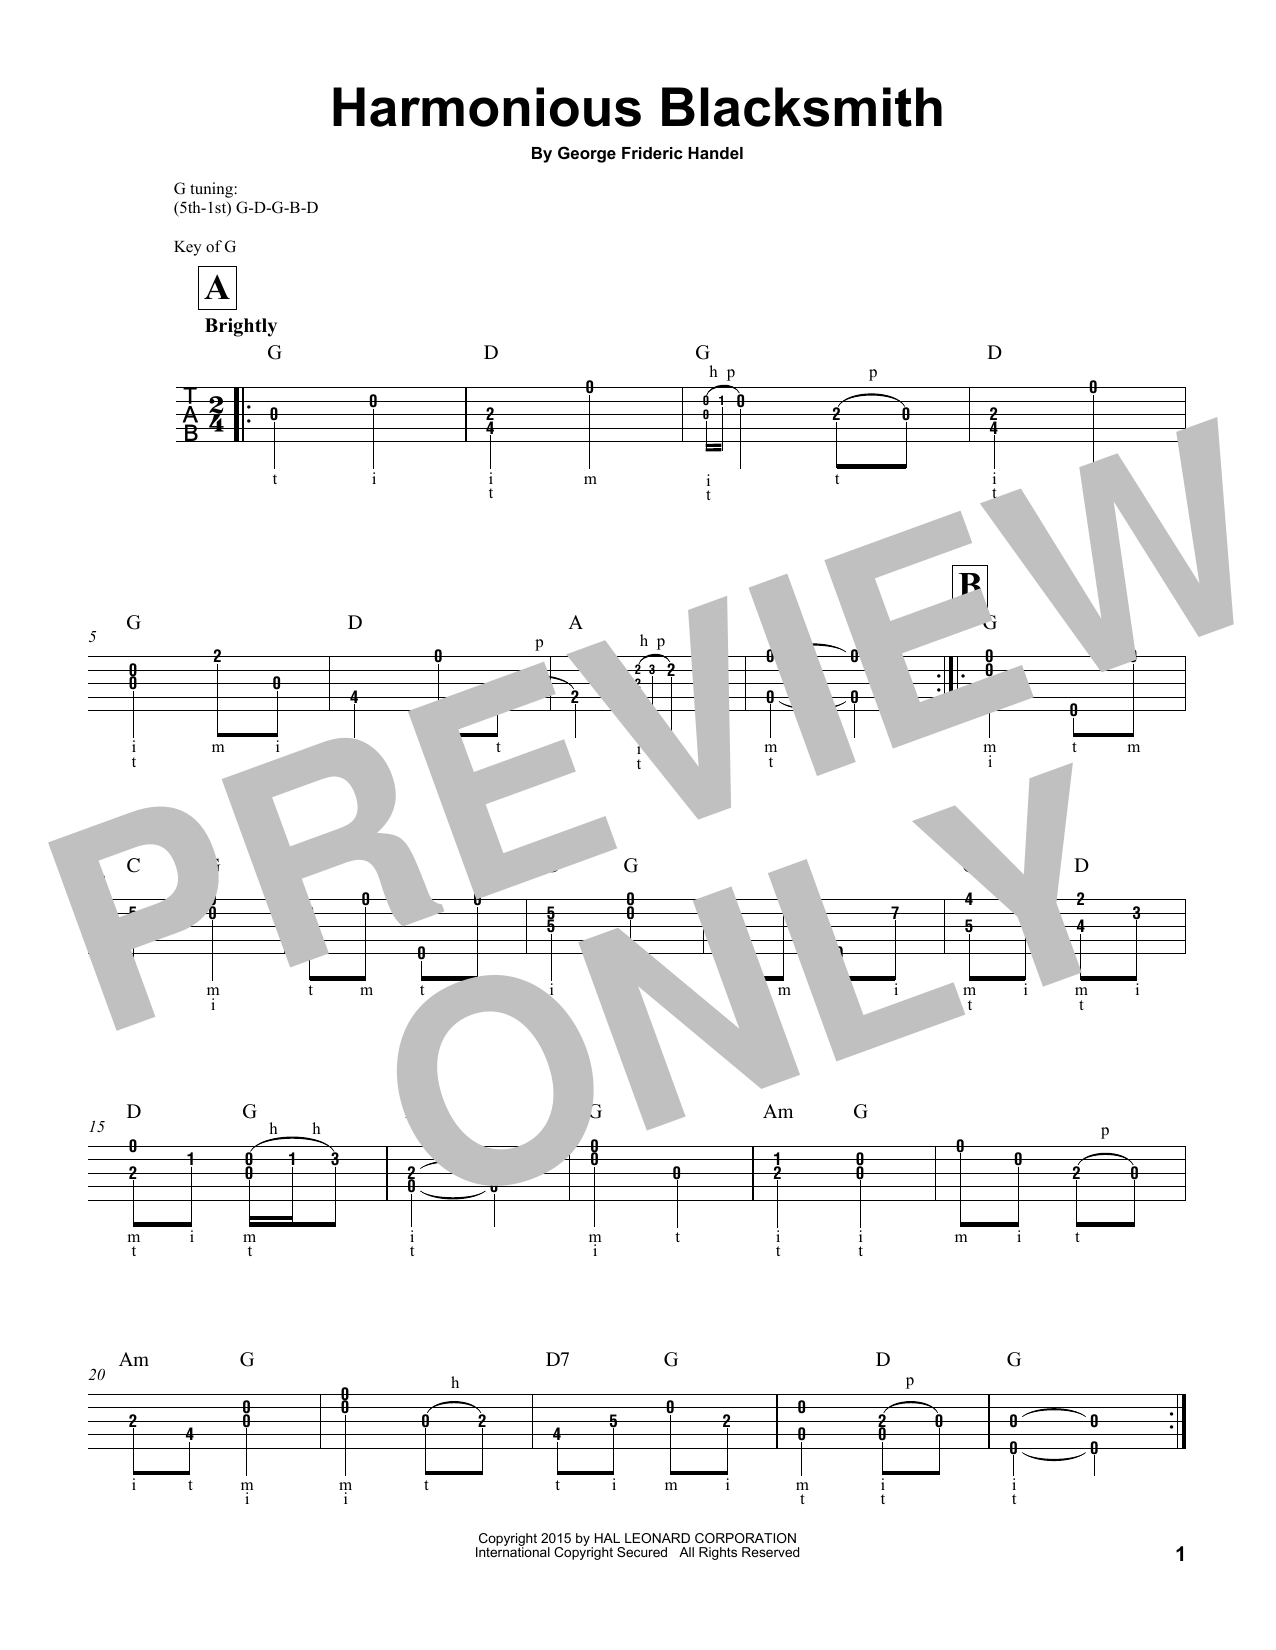 George Frideric Handel Harmonious Blacksmith Sheet Music Notes & Chords for Trombone - Download or Print PDF